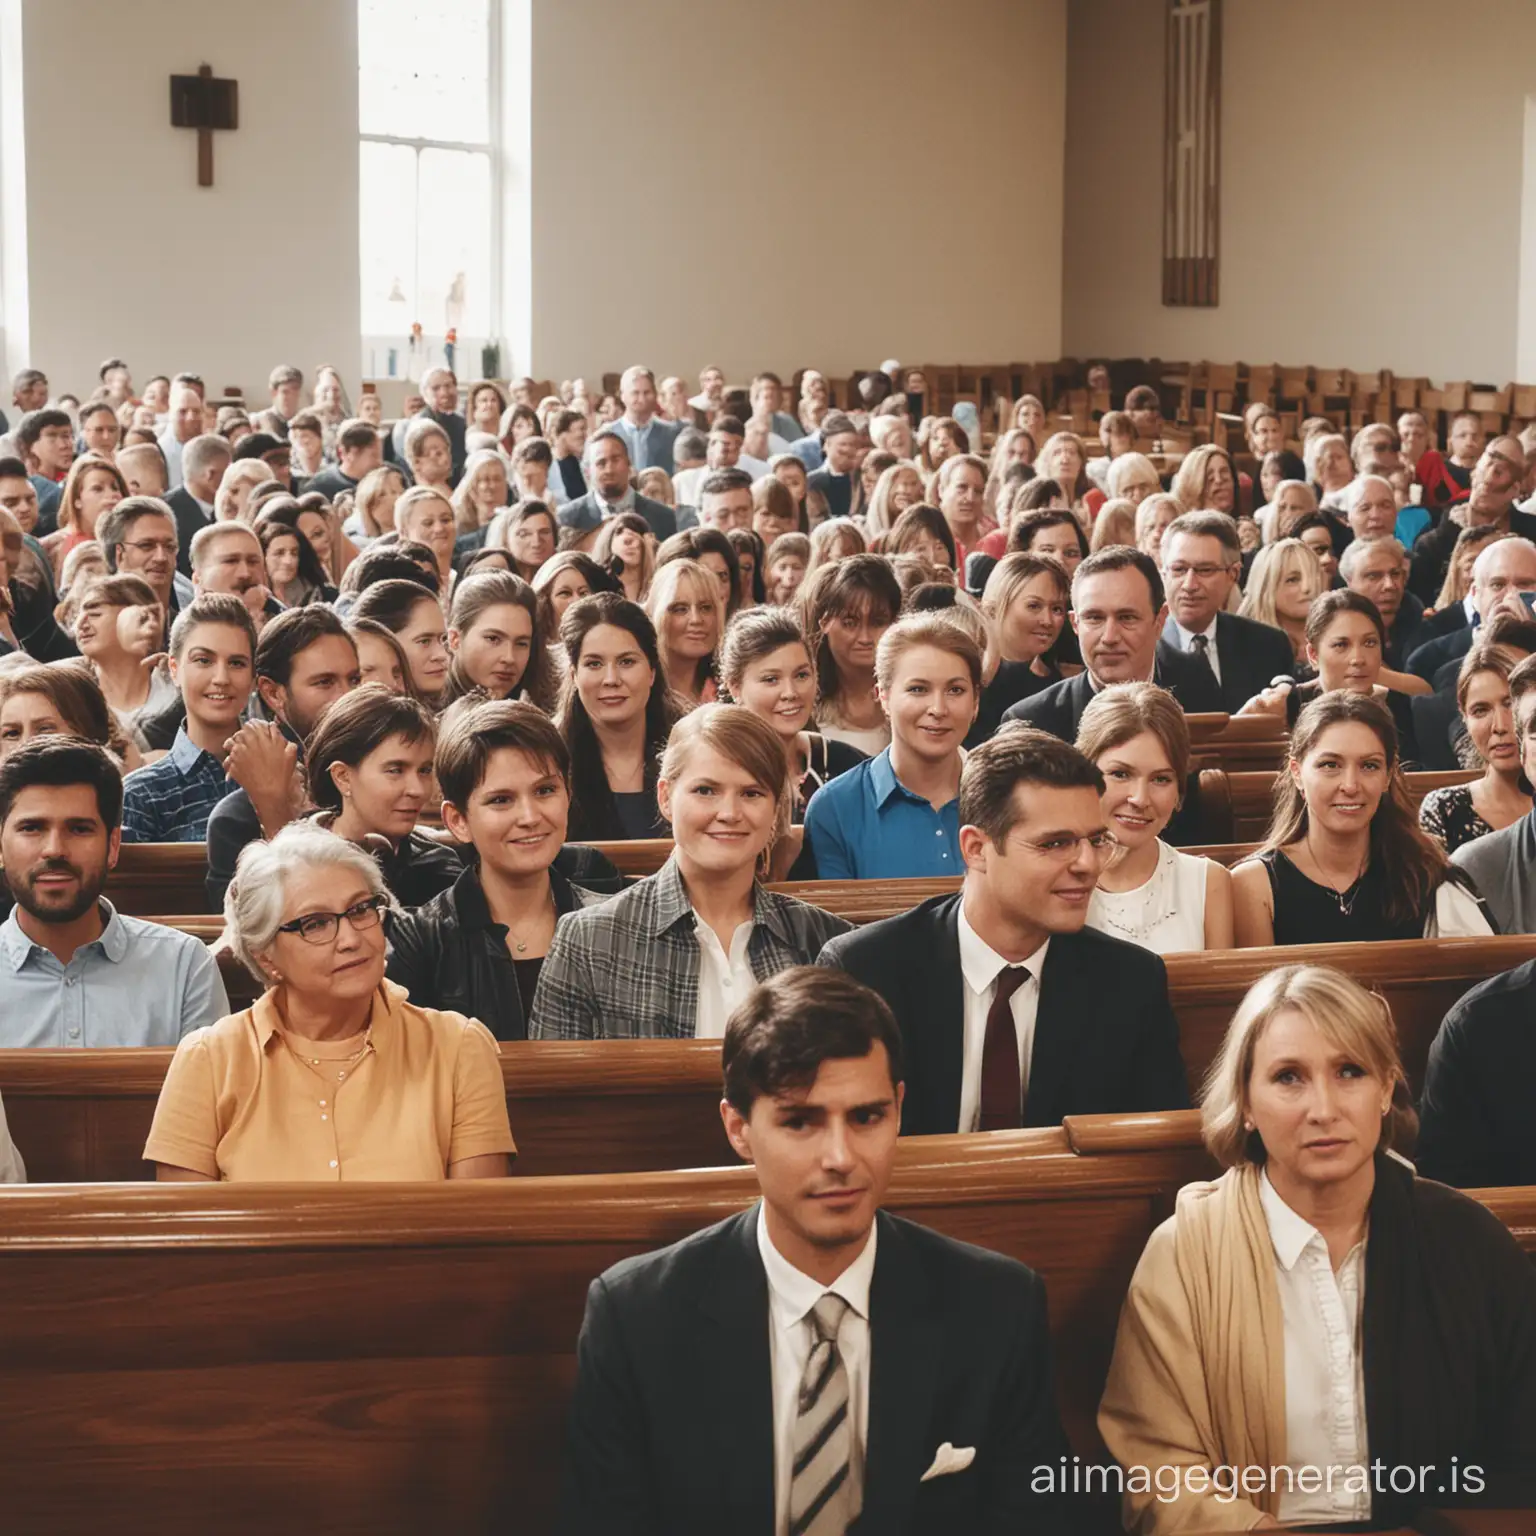 people at church